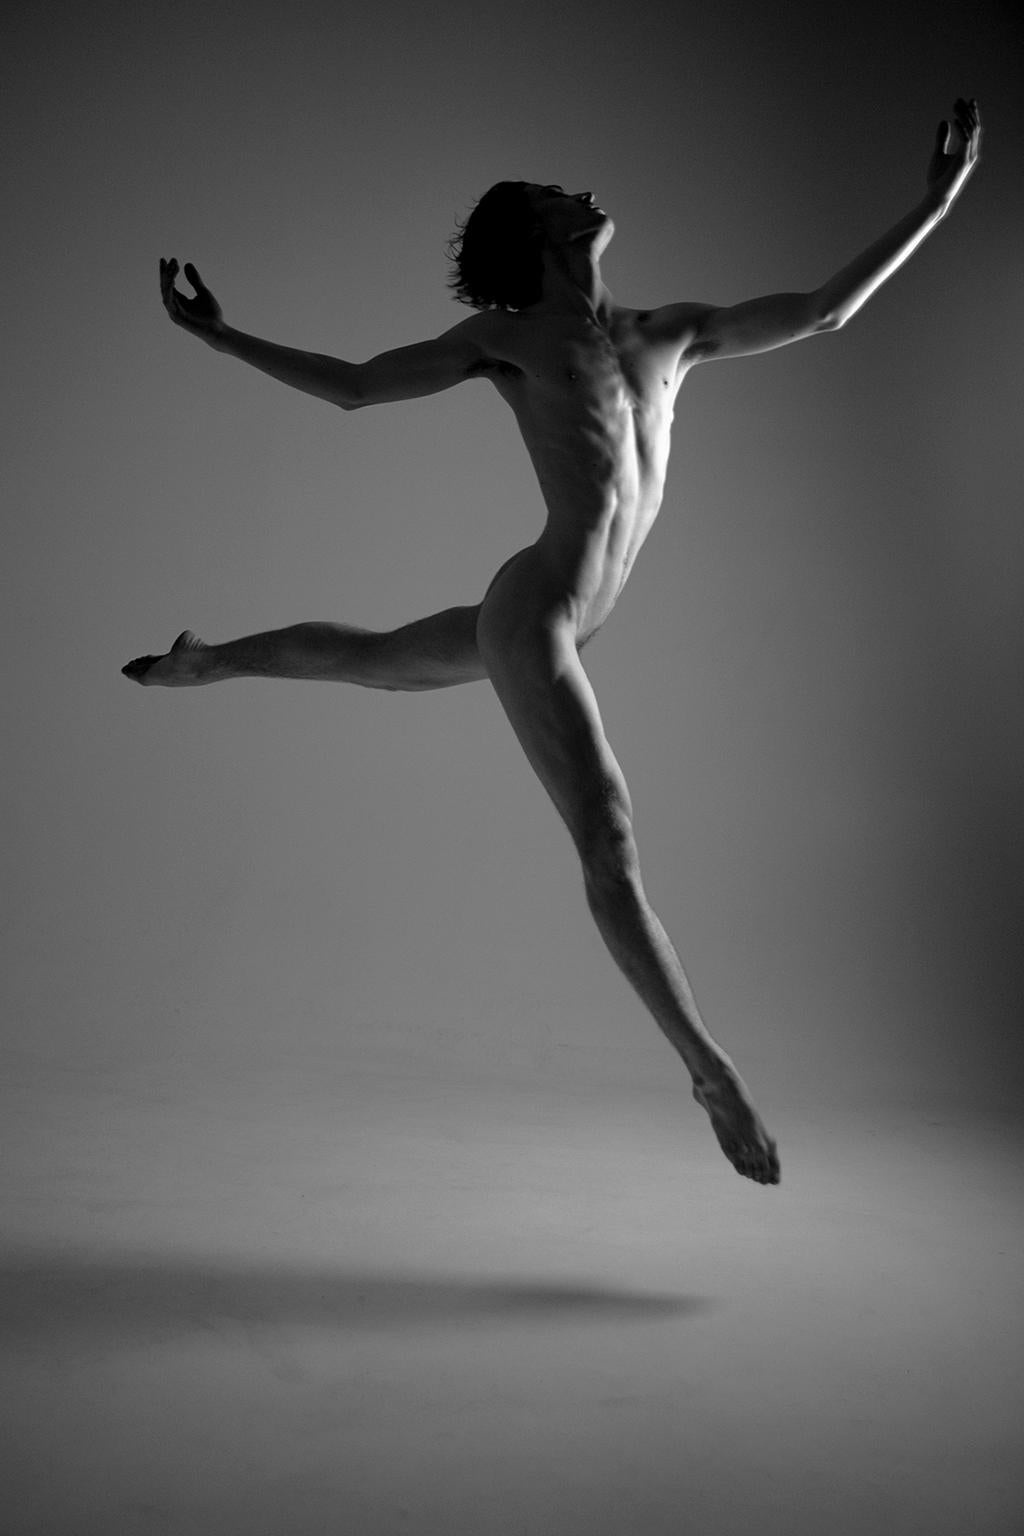 Apertura. The Bailarín, series. Male Nude dancer. Black & White photograph